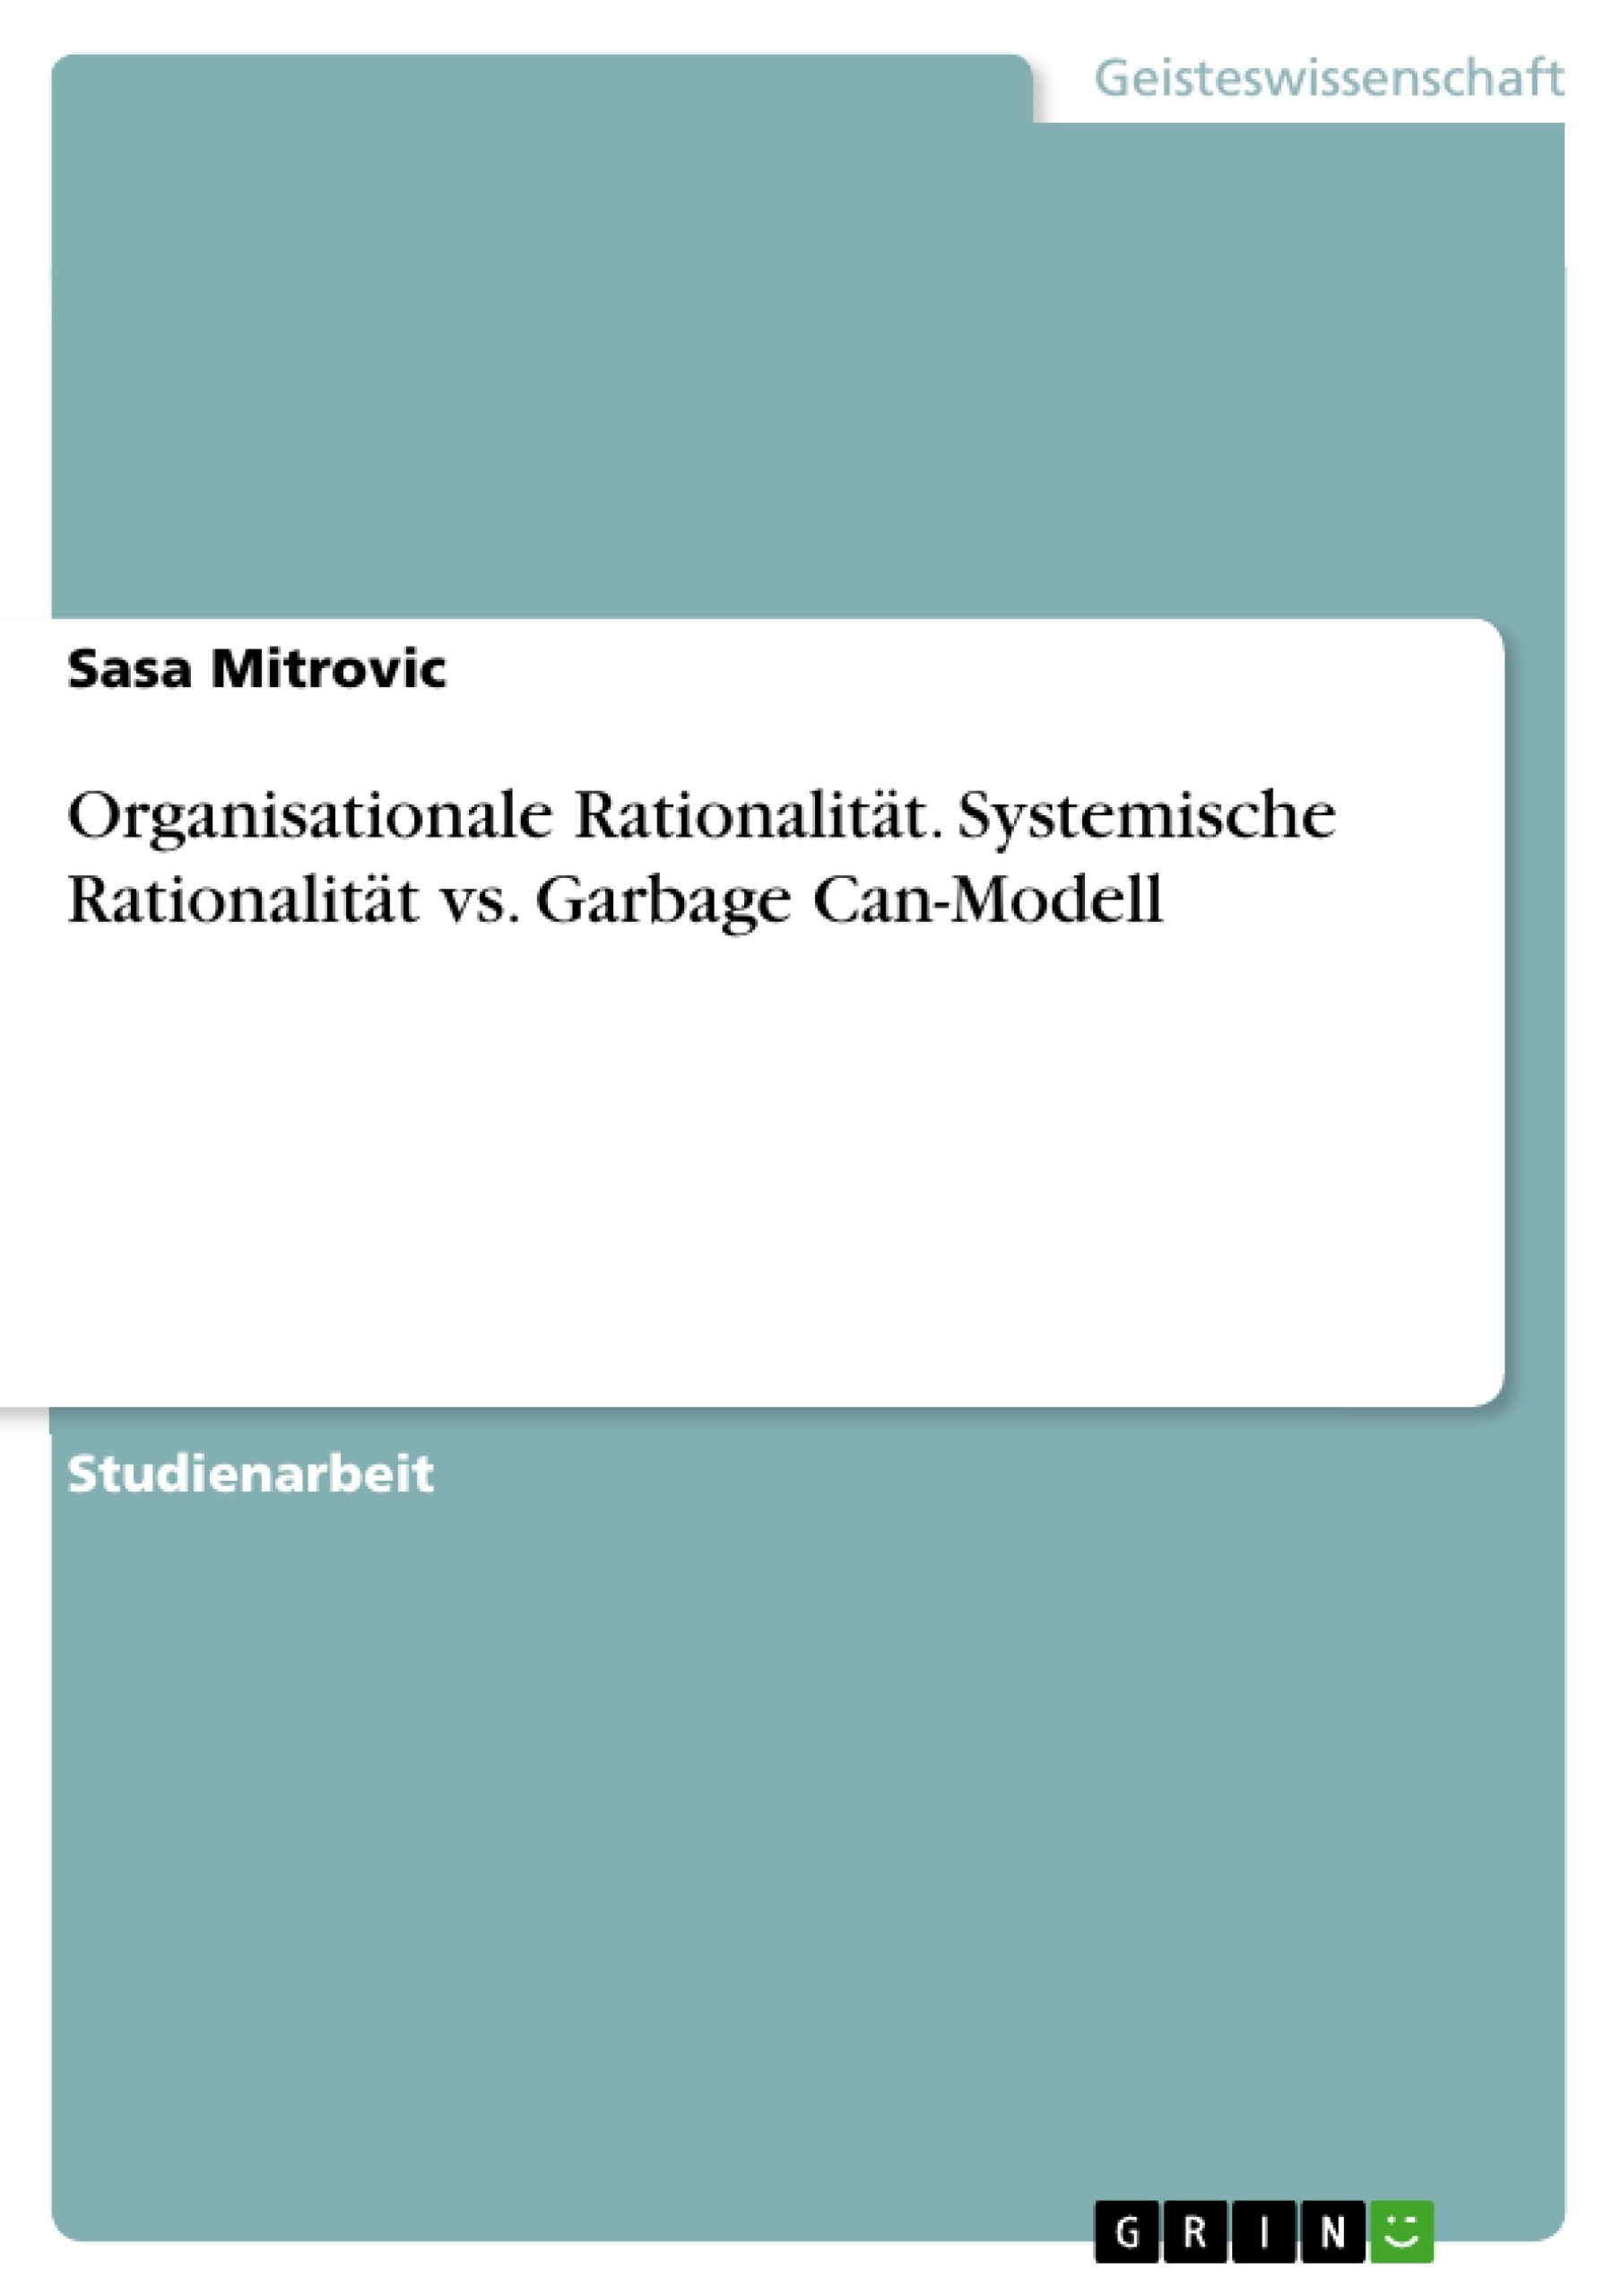 Title: Organisationale Rationalität. Systemische Rationalität vs. Garbage Can-Modell